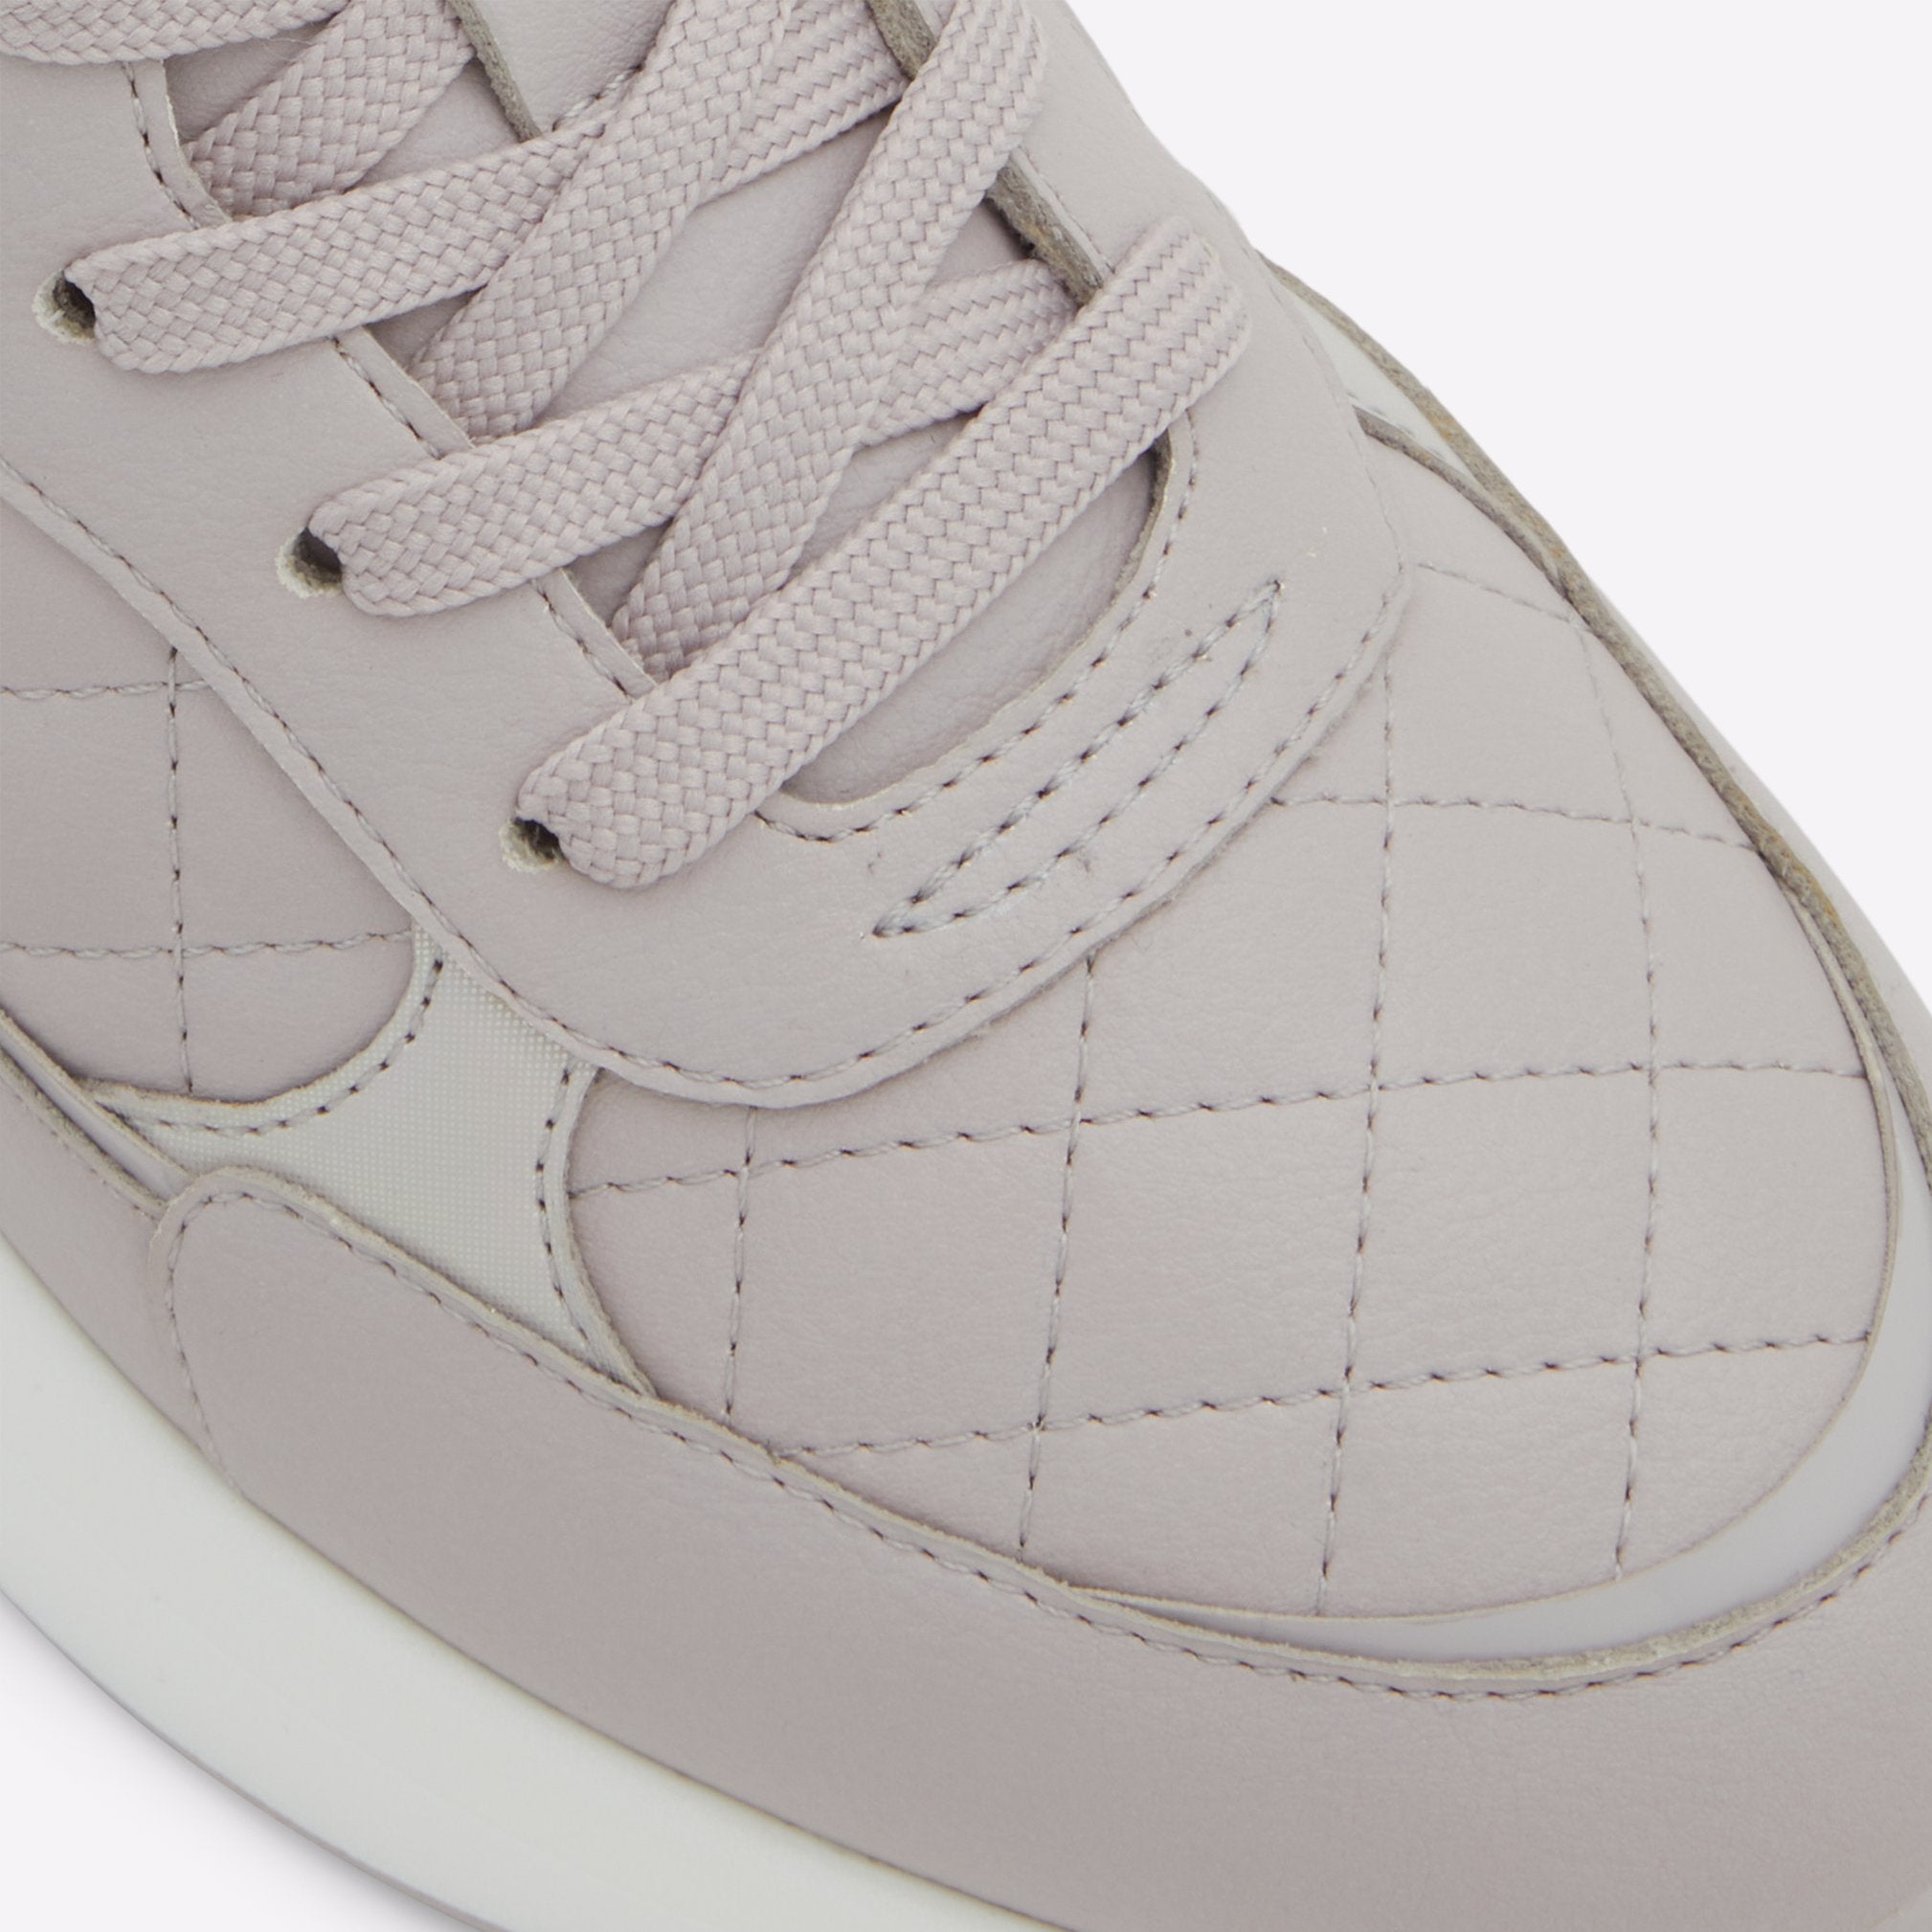 Cosmicstep Women Shoes - Grey - ALDO KSA